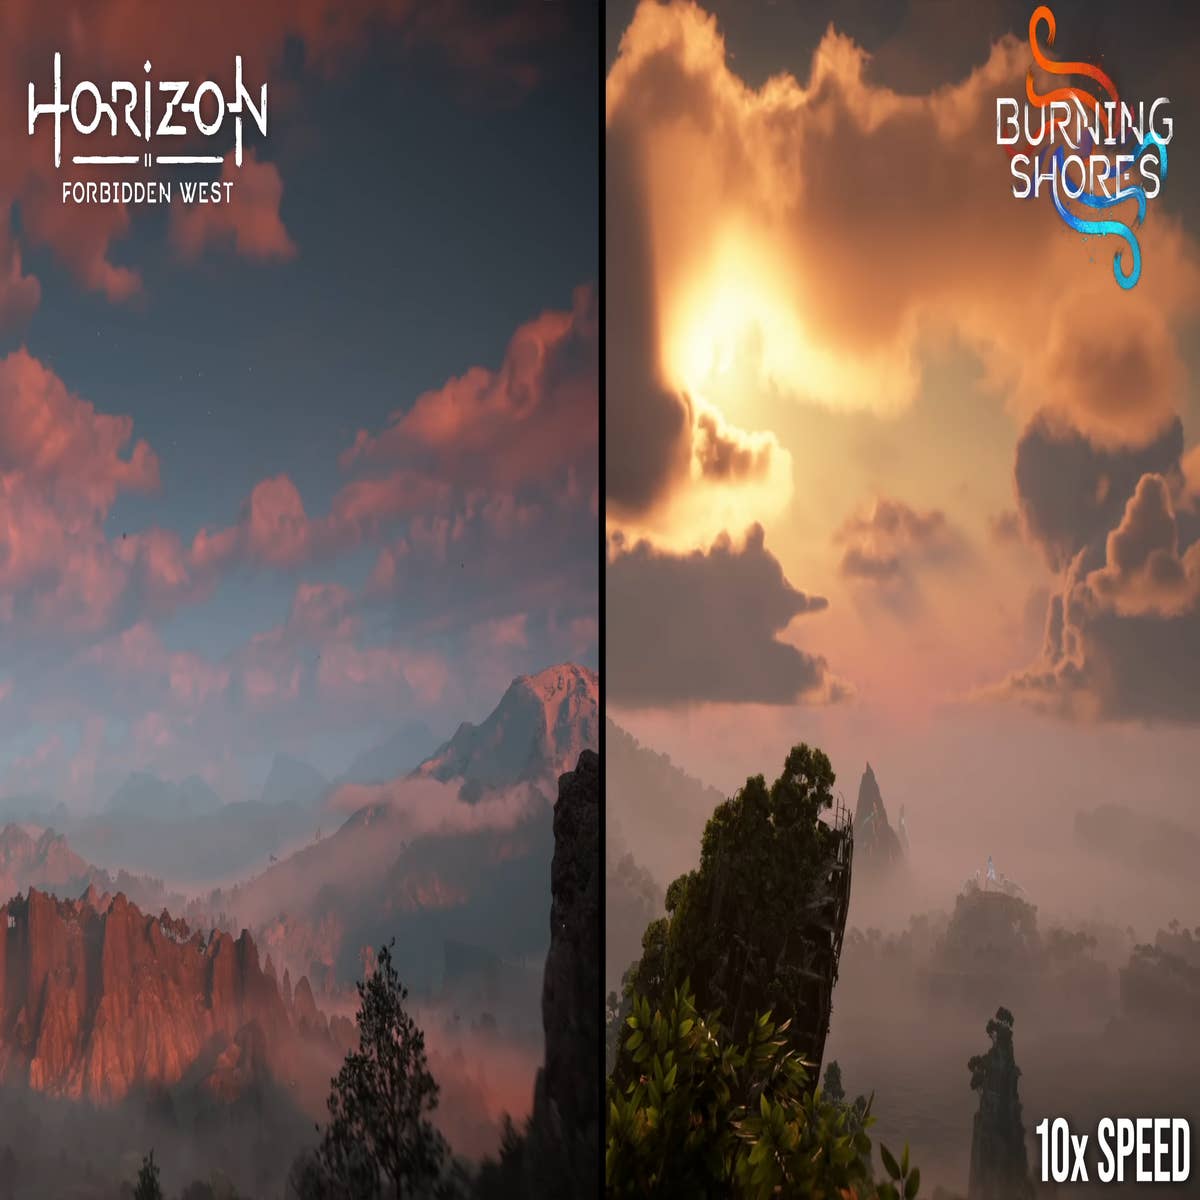 Horizon Forbidden West: Burning Shores Review